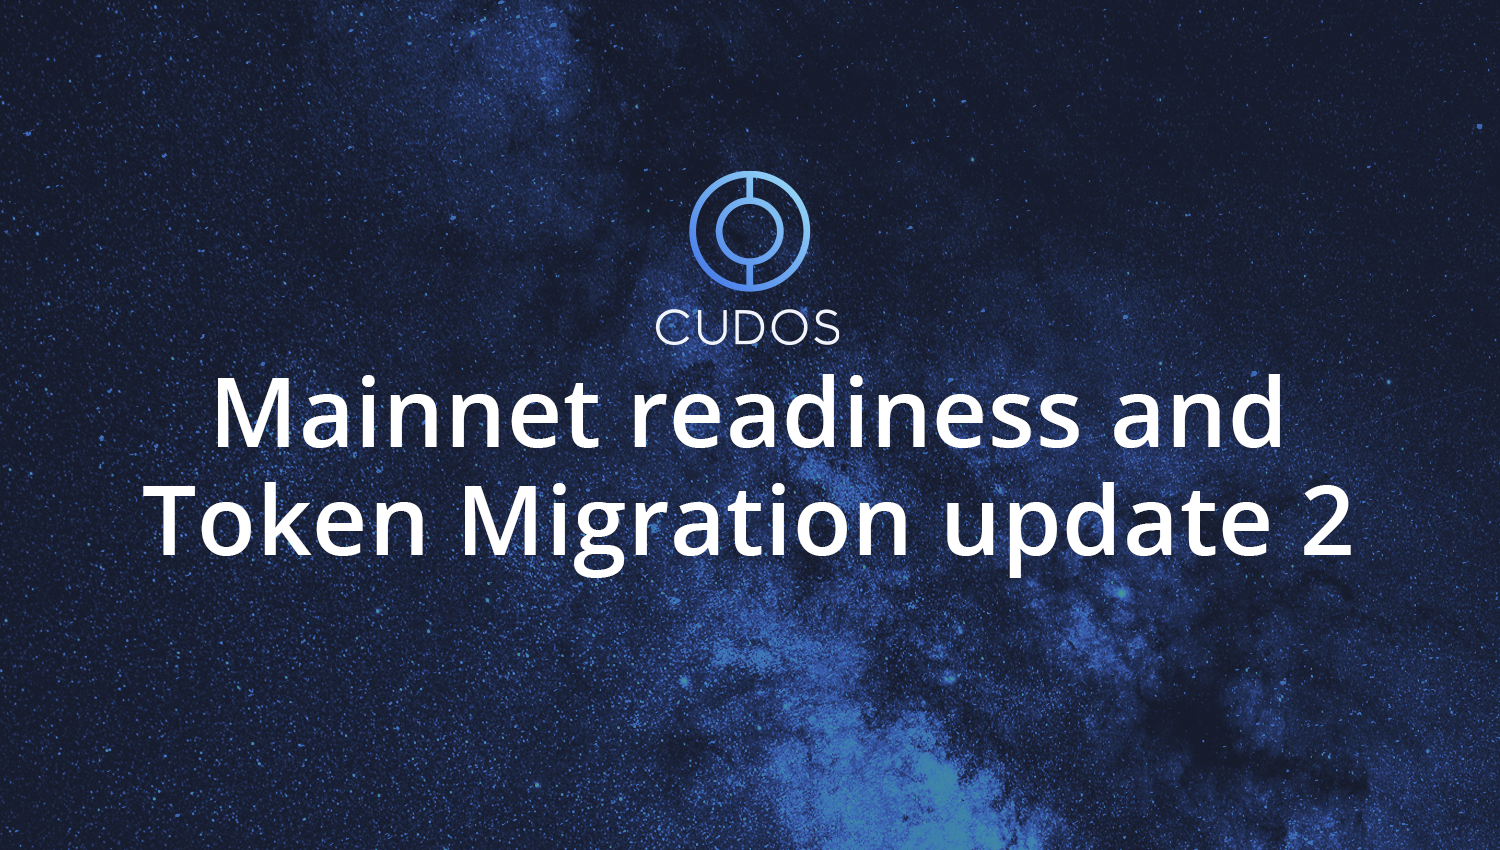 Cudos mainnet and Token Migration update 2